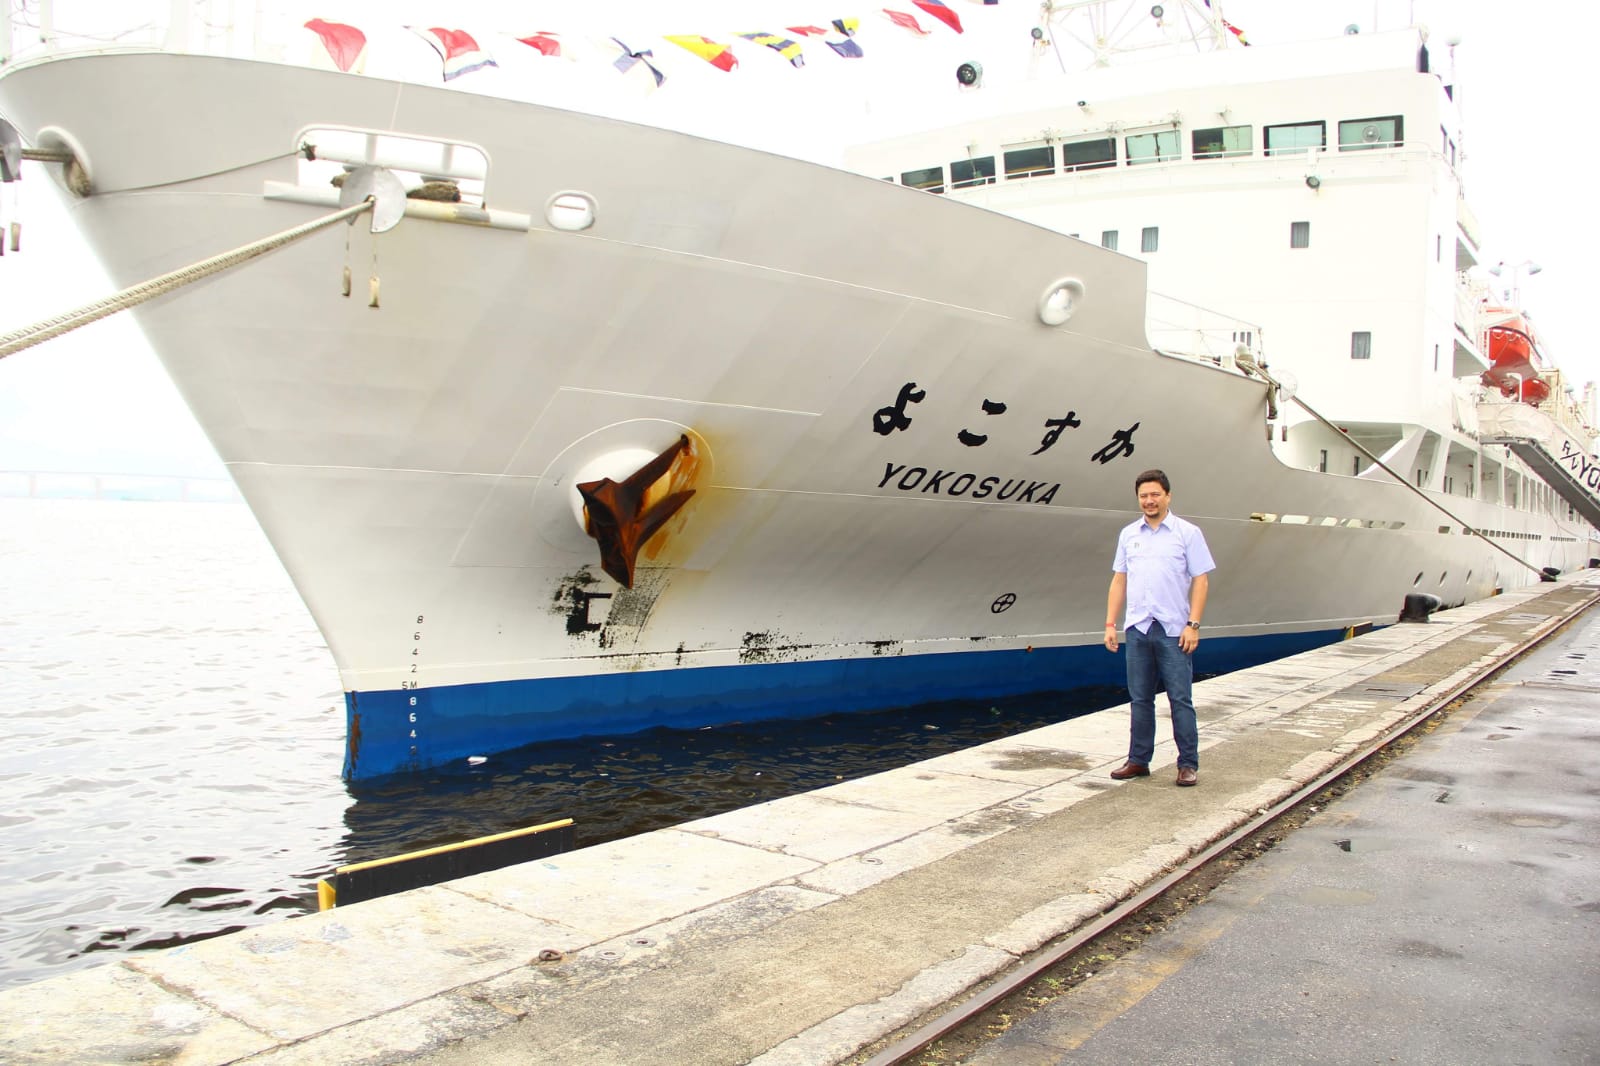 Sumida próximo ao navio Yokosuka da JAMSTEC. Foto: Luciano Souza